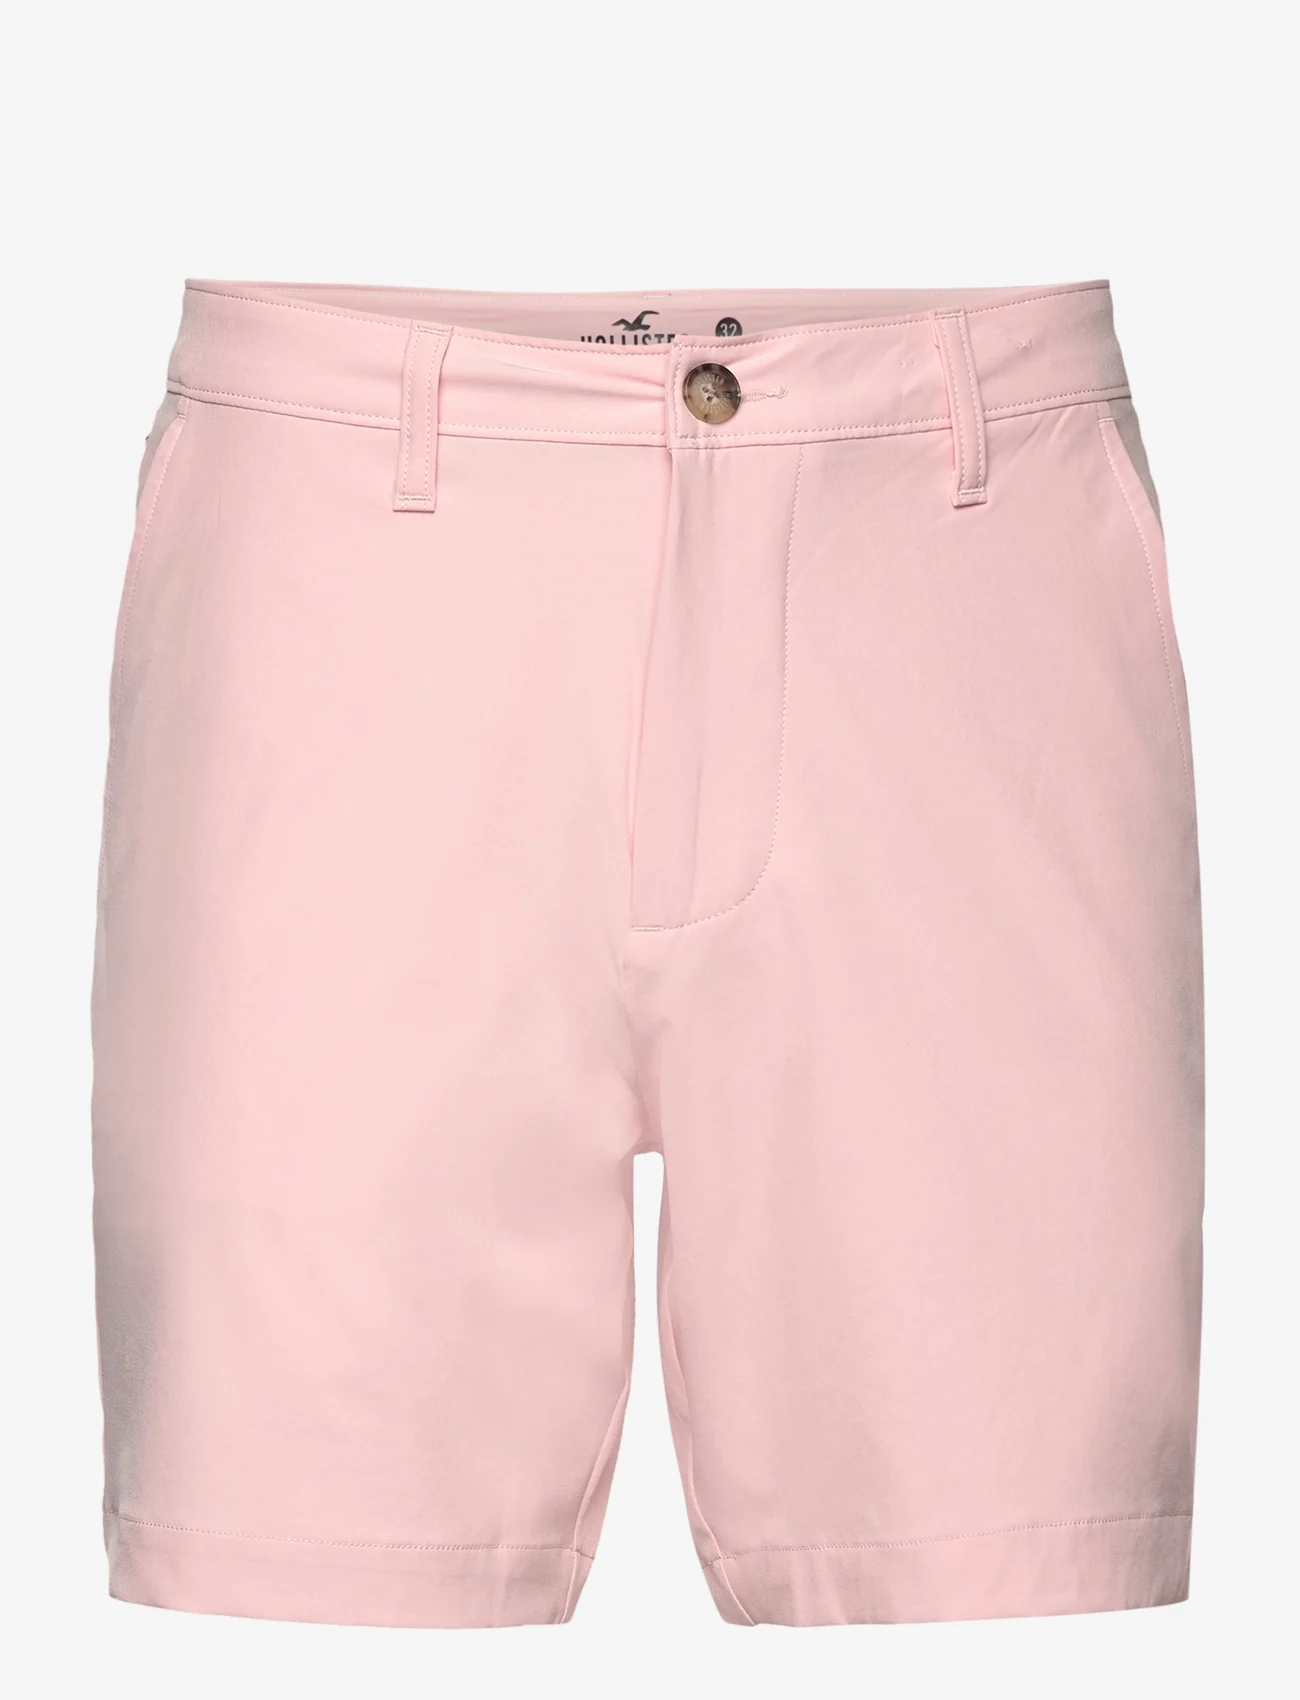 Hollister - HCo. GUYS SHORTS - chino shorts - pink - 0